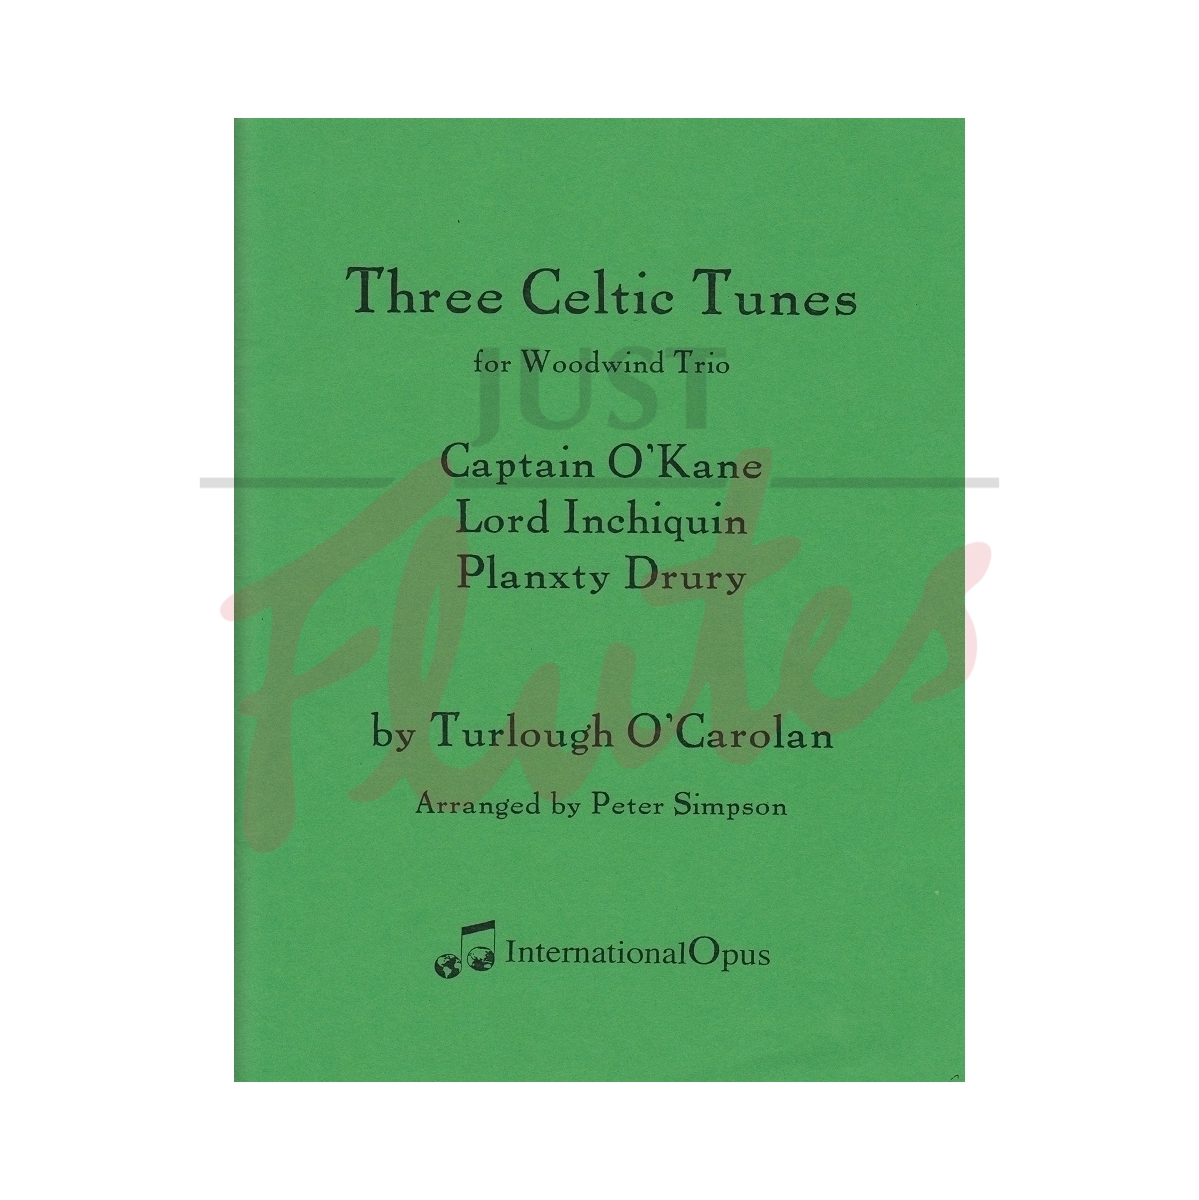 Three Celtic Tunes [Oboe, Clarinet and Bassoon]